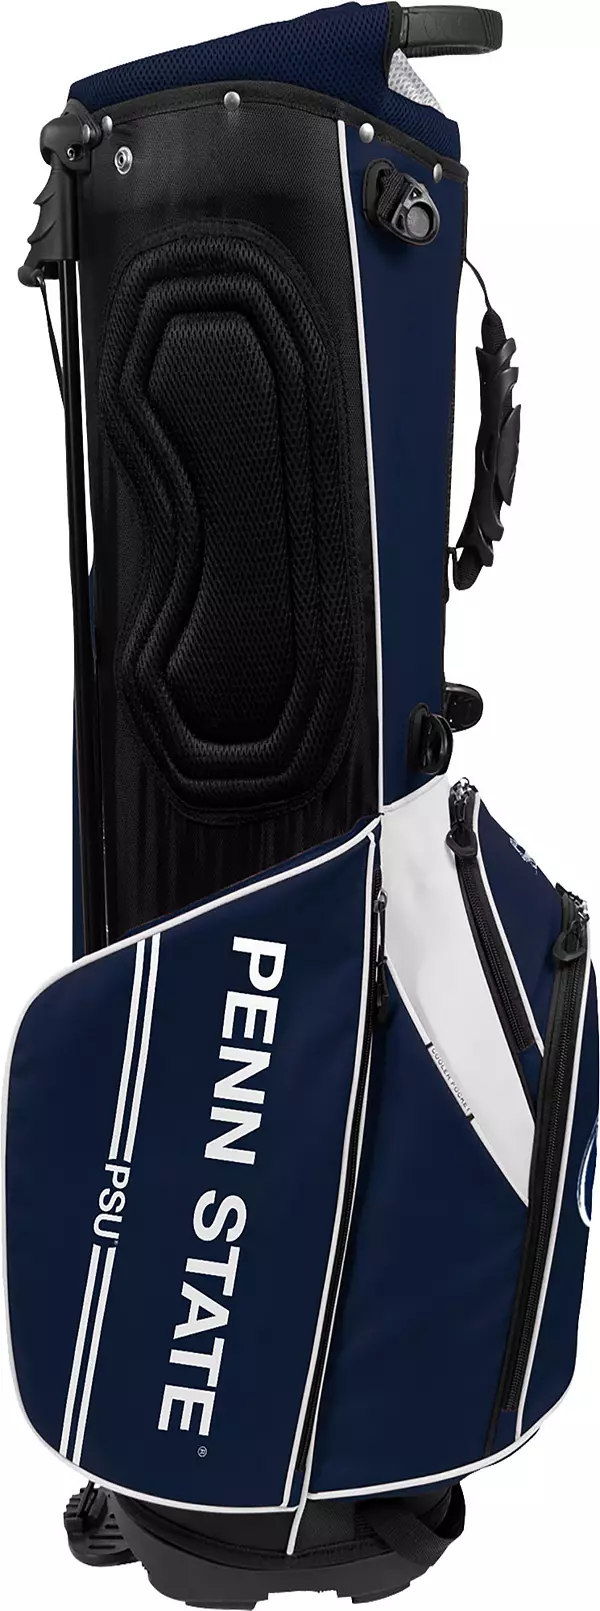 Team Effort Penn State Nittany Lions Caddie Carry Hybrid Bag